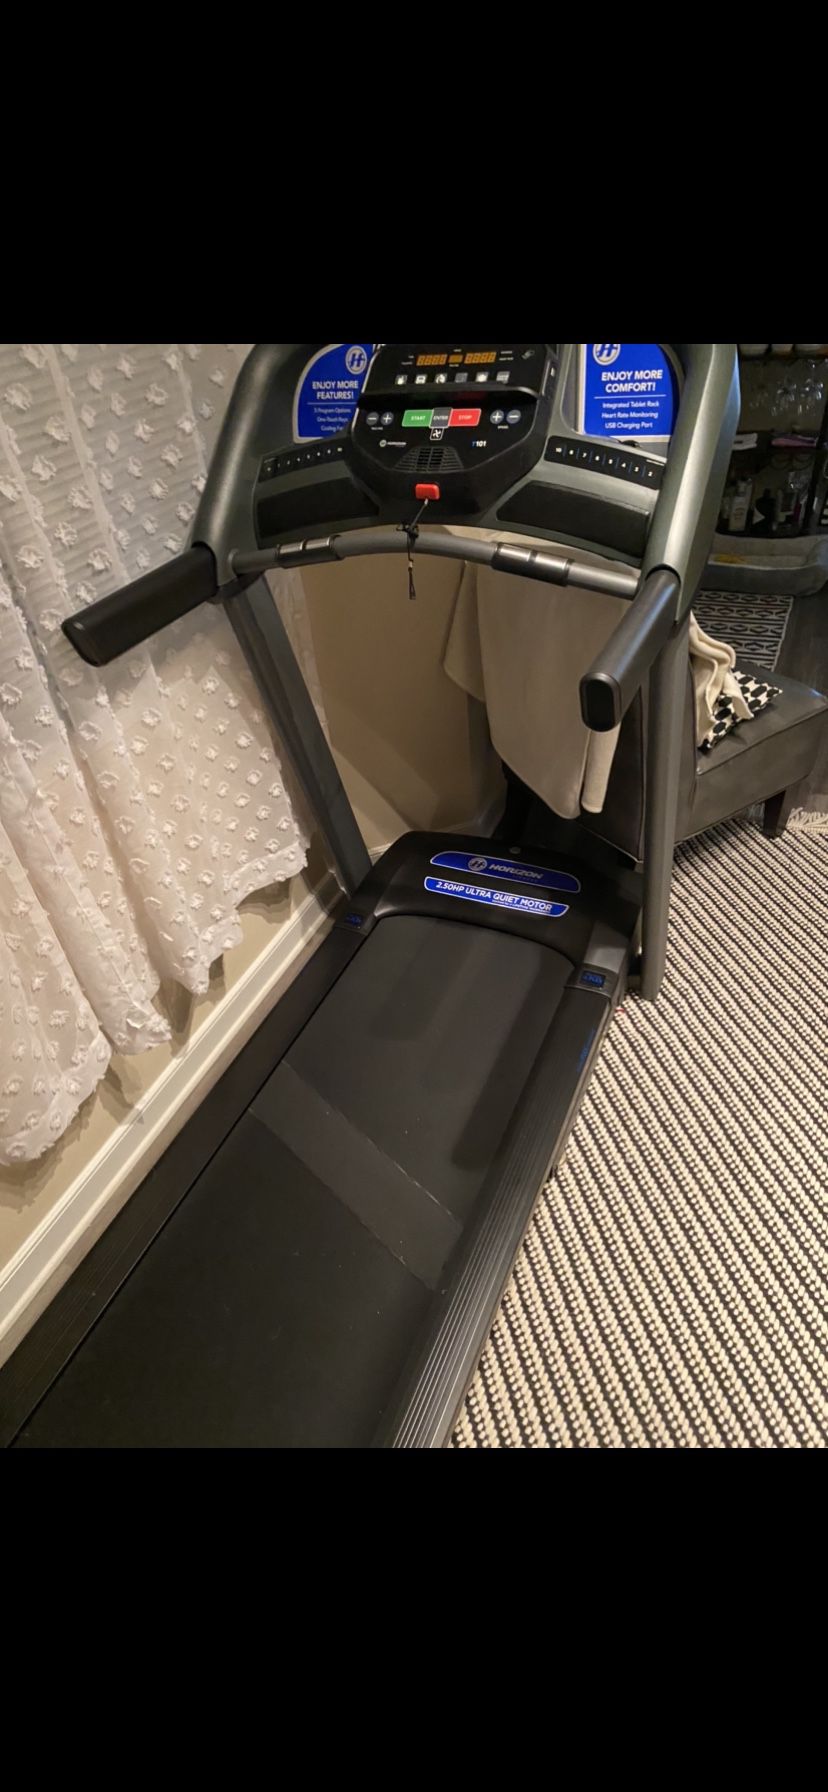 Horizon fitness treadmill t-101